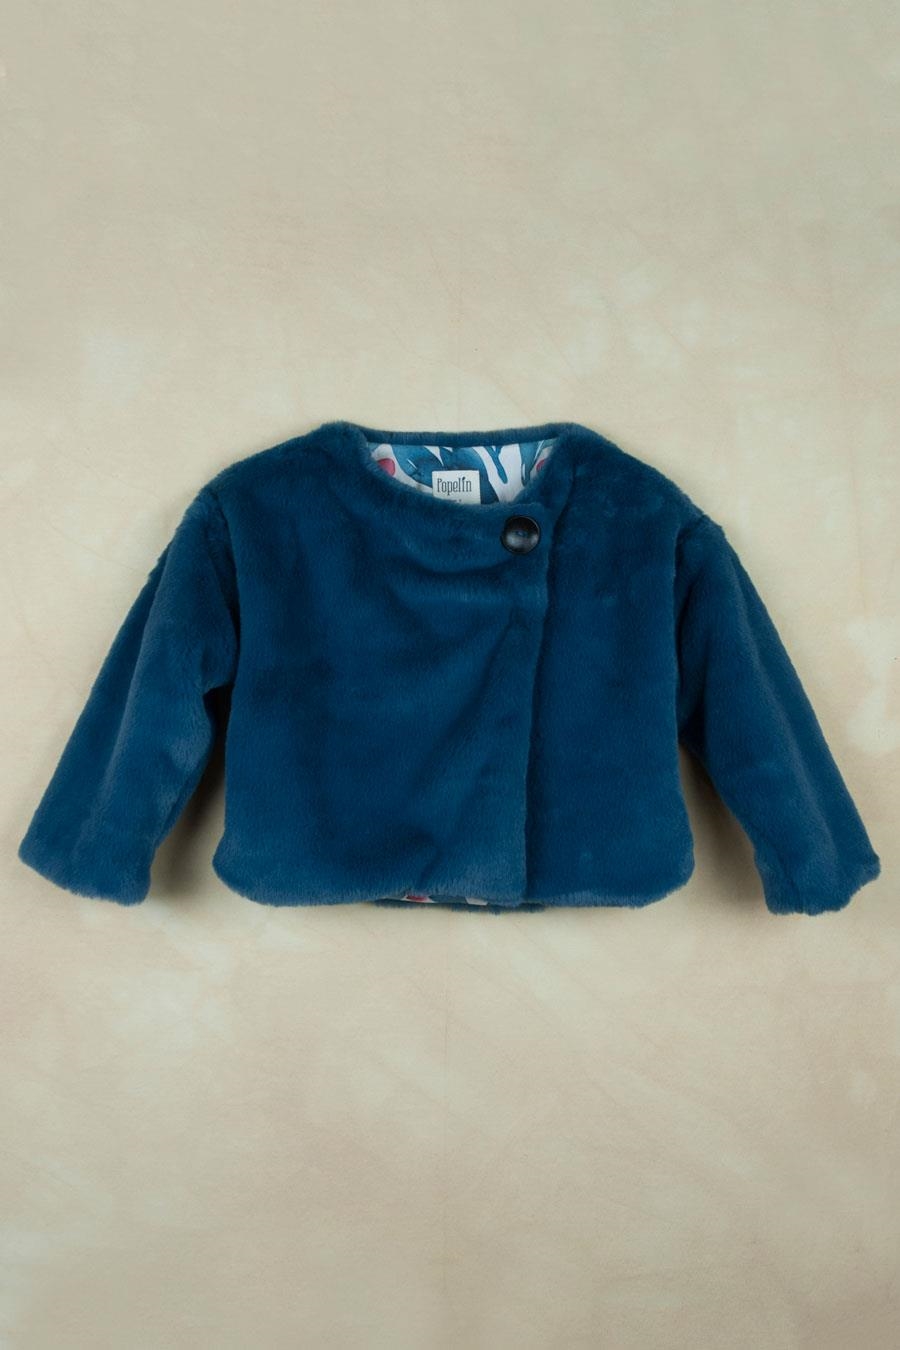 Mod.25.1 - Short Blue Coat | AW18.19-Mod.25.1 - Short Blue Coat | 1